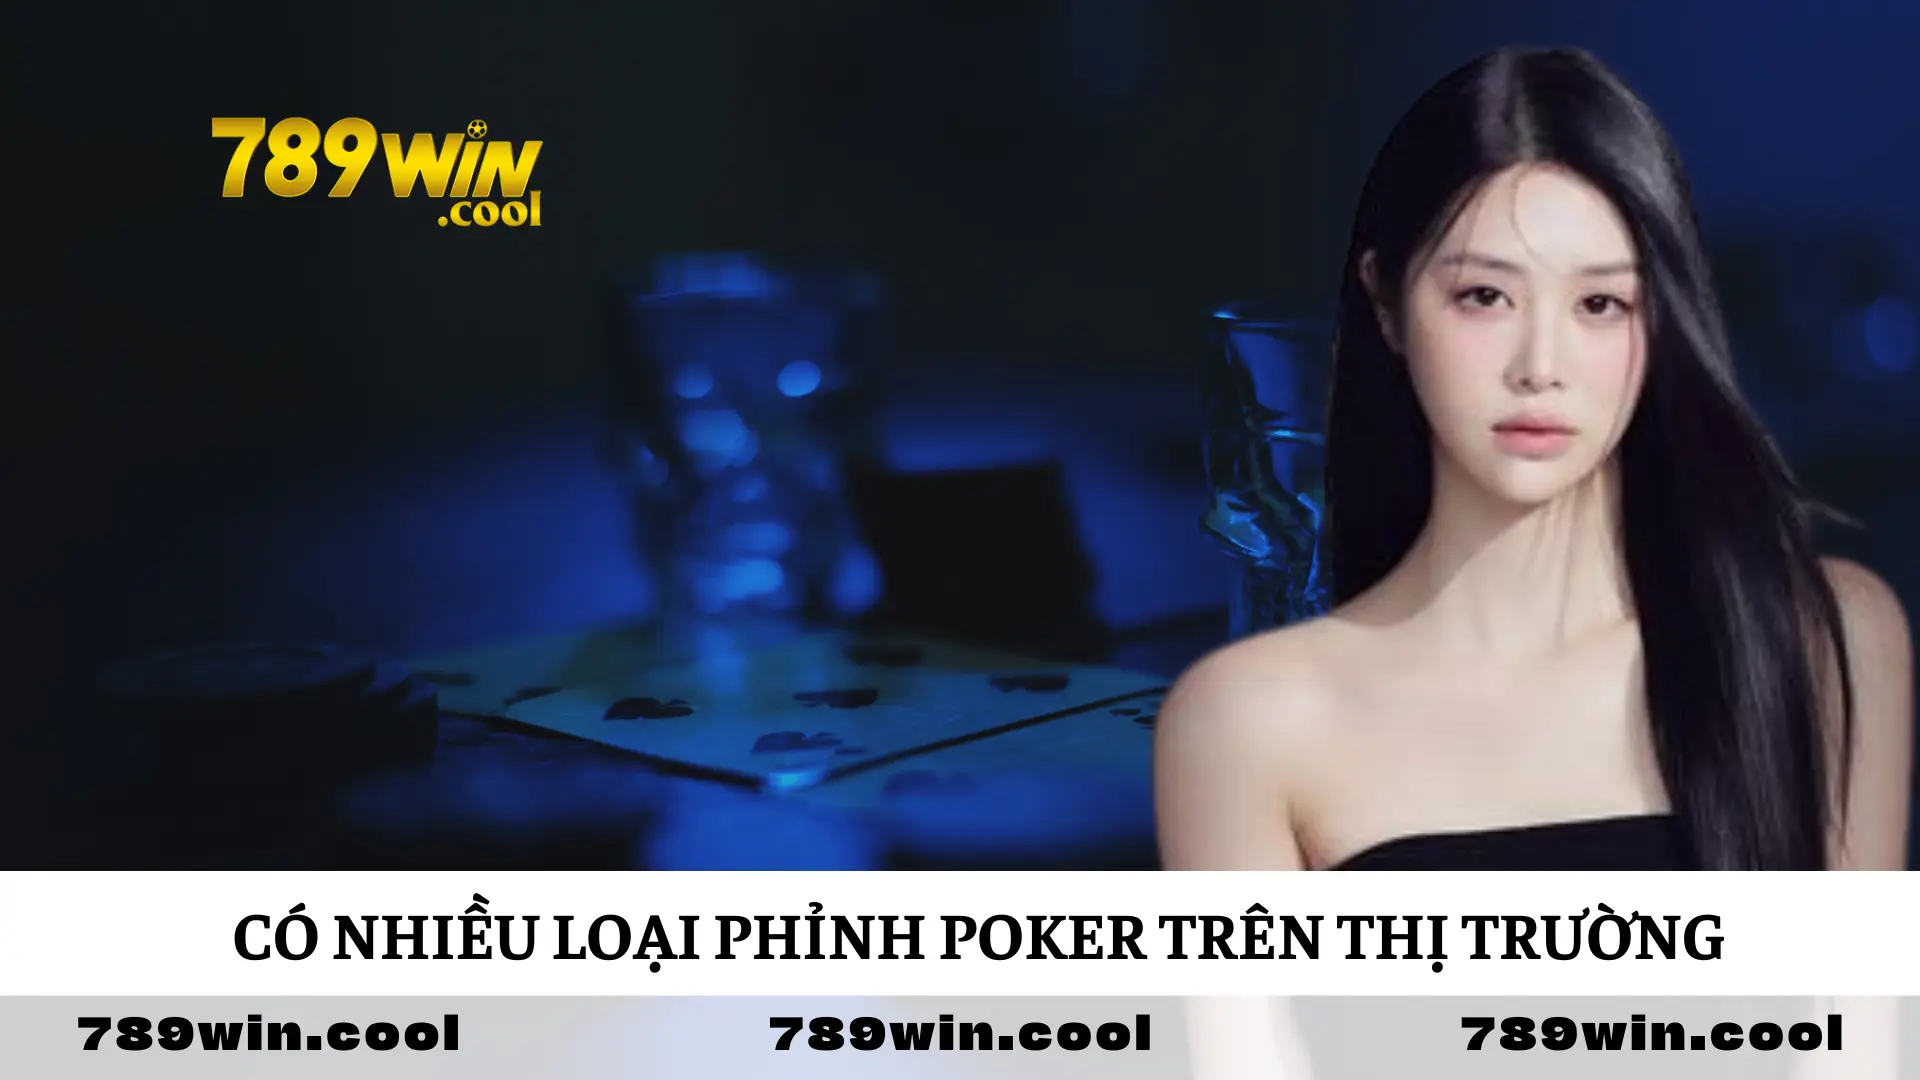 phinh-poker-tren-thi-truong-hien-nay-rat-da-dang